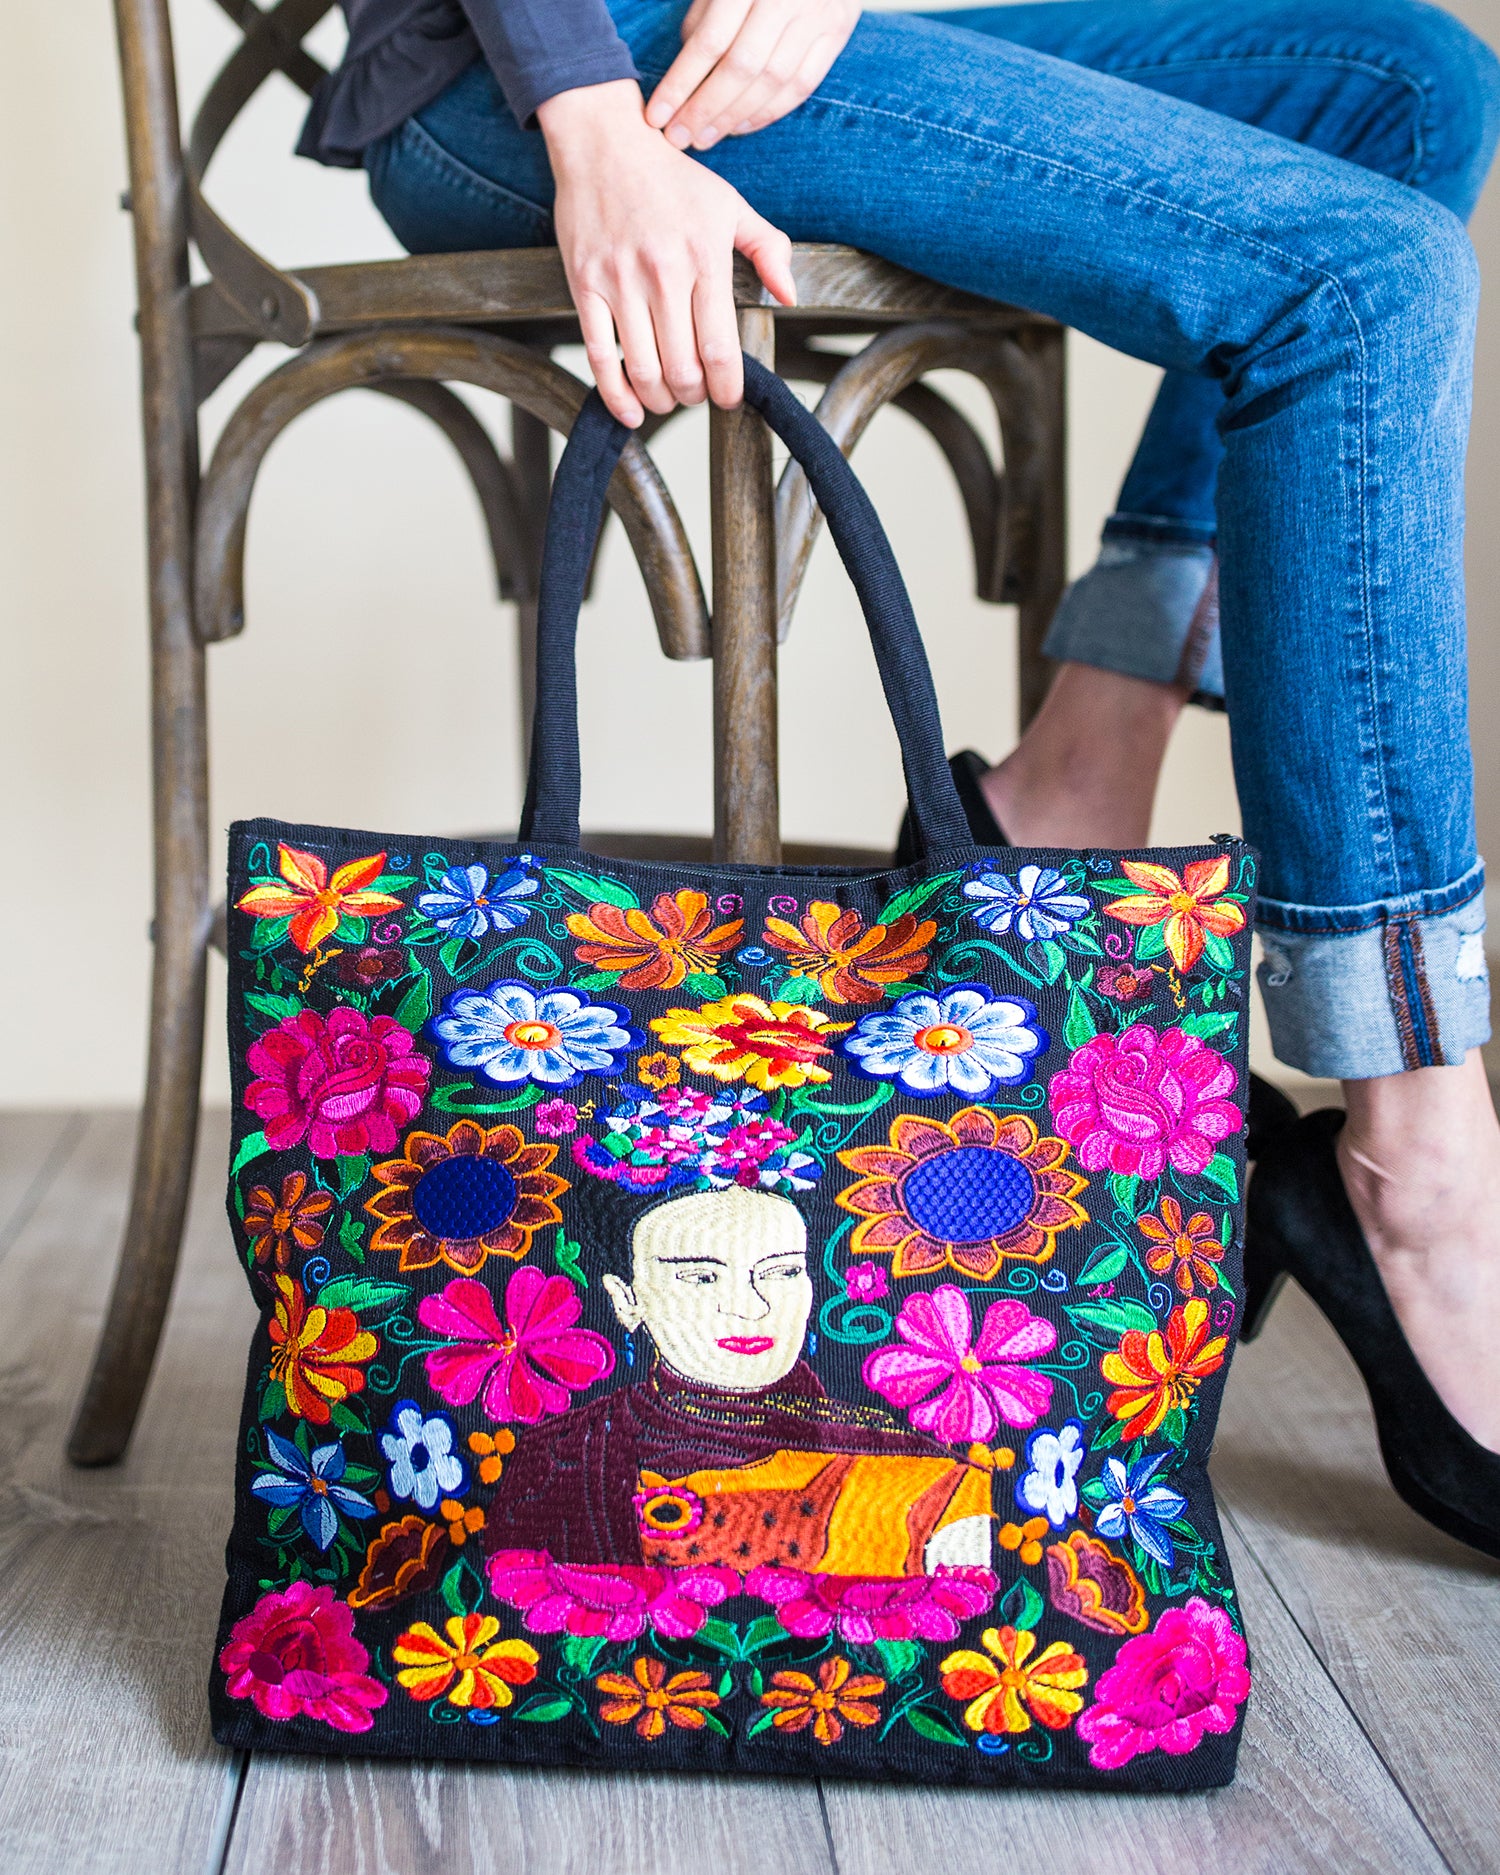 Frida Kahlo Fruit cosmetic bag